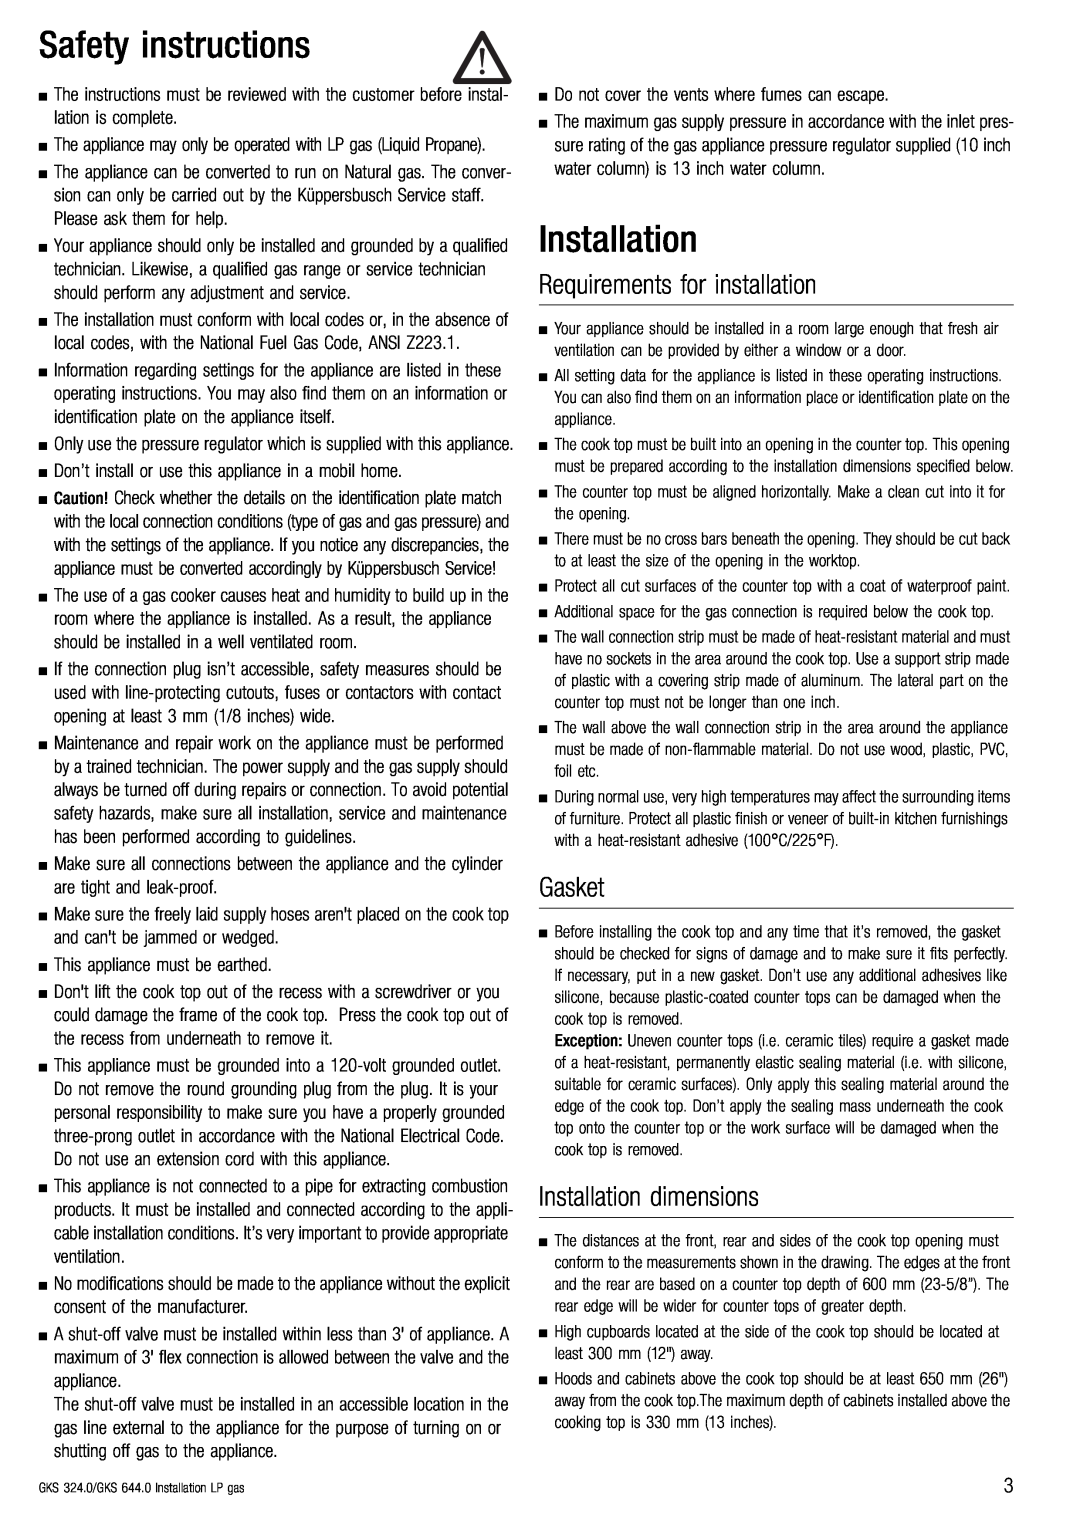 Kuppersbusch USA GKS 324.0, GKS 644.0 Safety instructions, Installation, Requirements for installation, Gasket 